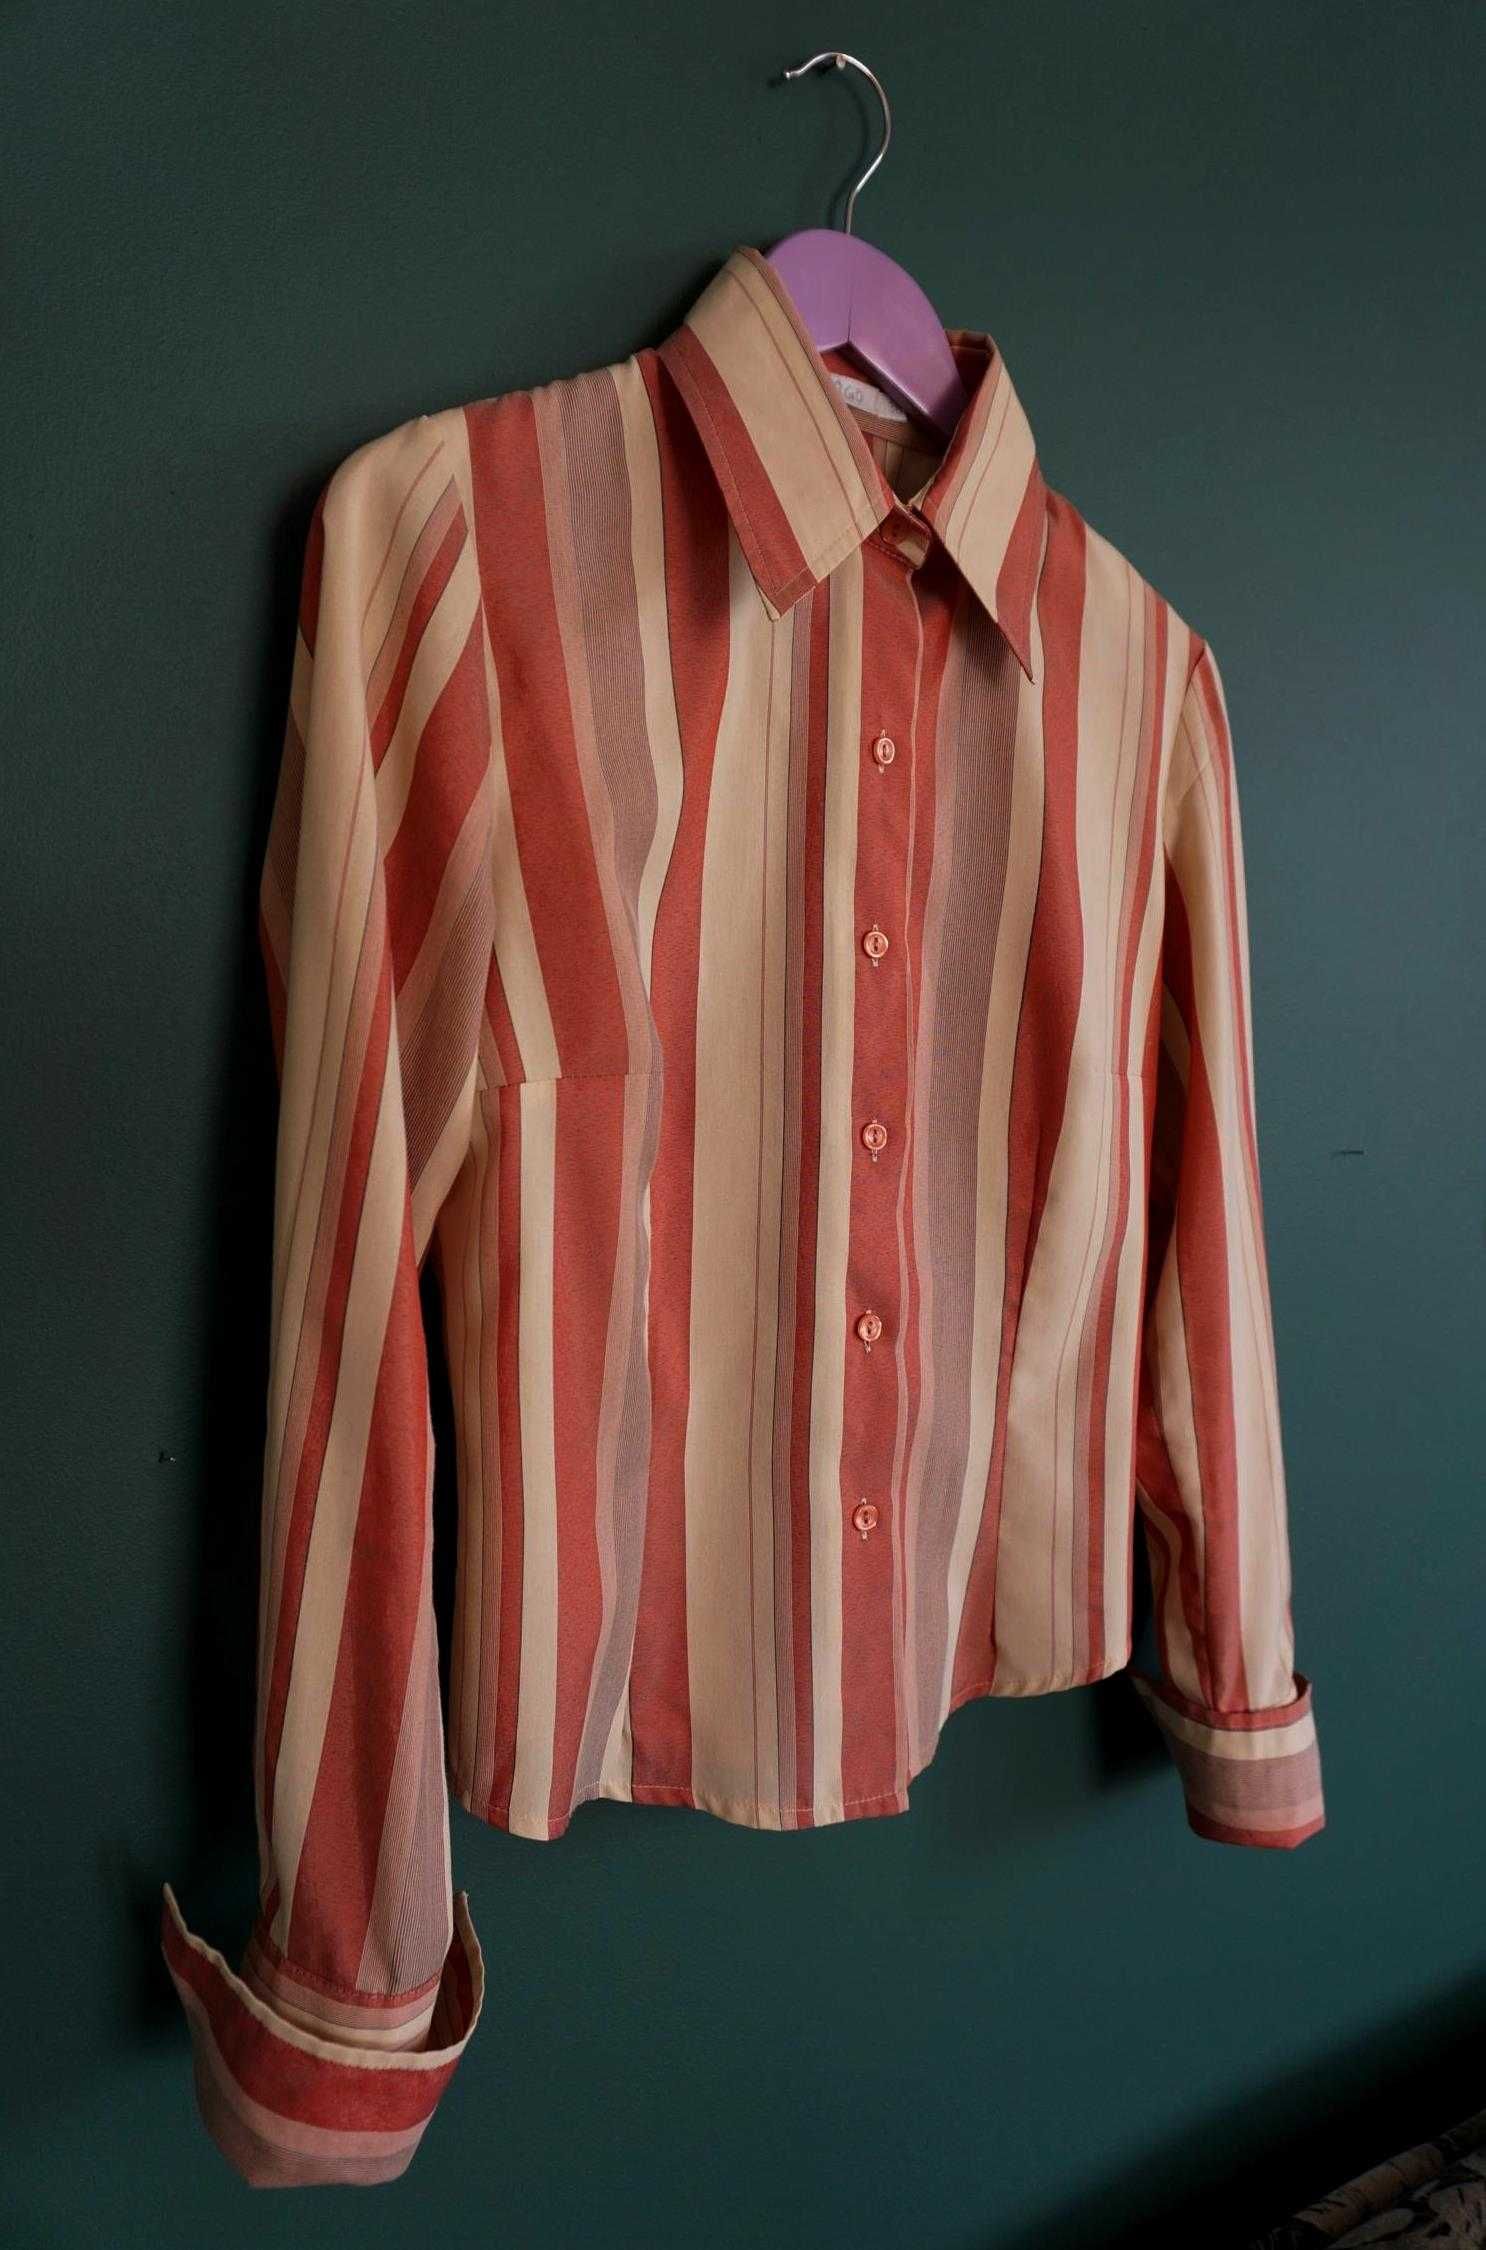 Koszula bluzka M 38 Margo paski pasy pionowe kremowa ruda